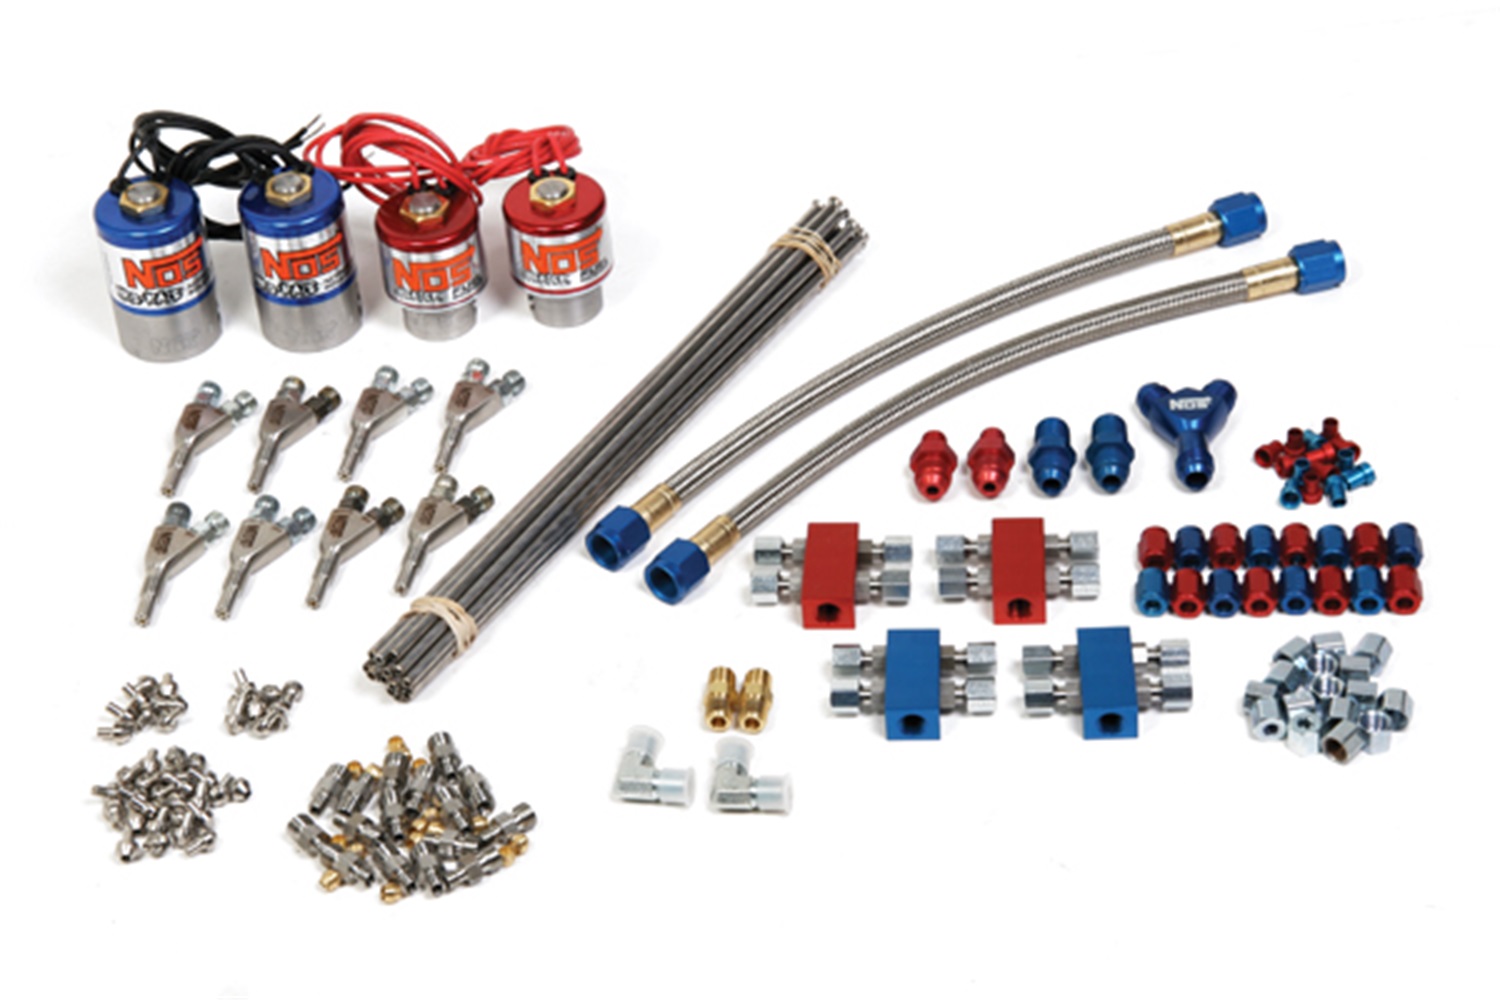 Nitrous Oxide Injection System Kit, NOS Plumb Kits, PROFESSIONAL PRO RACE FOGGER ANNULAR NOZZLE